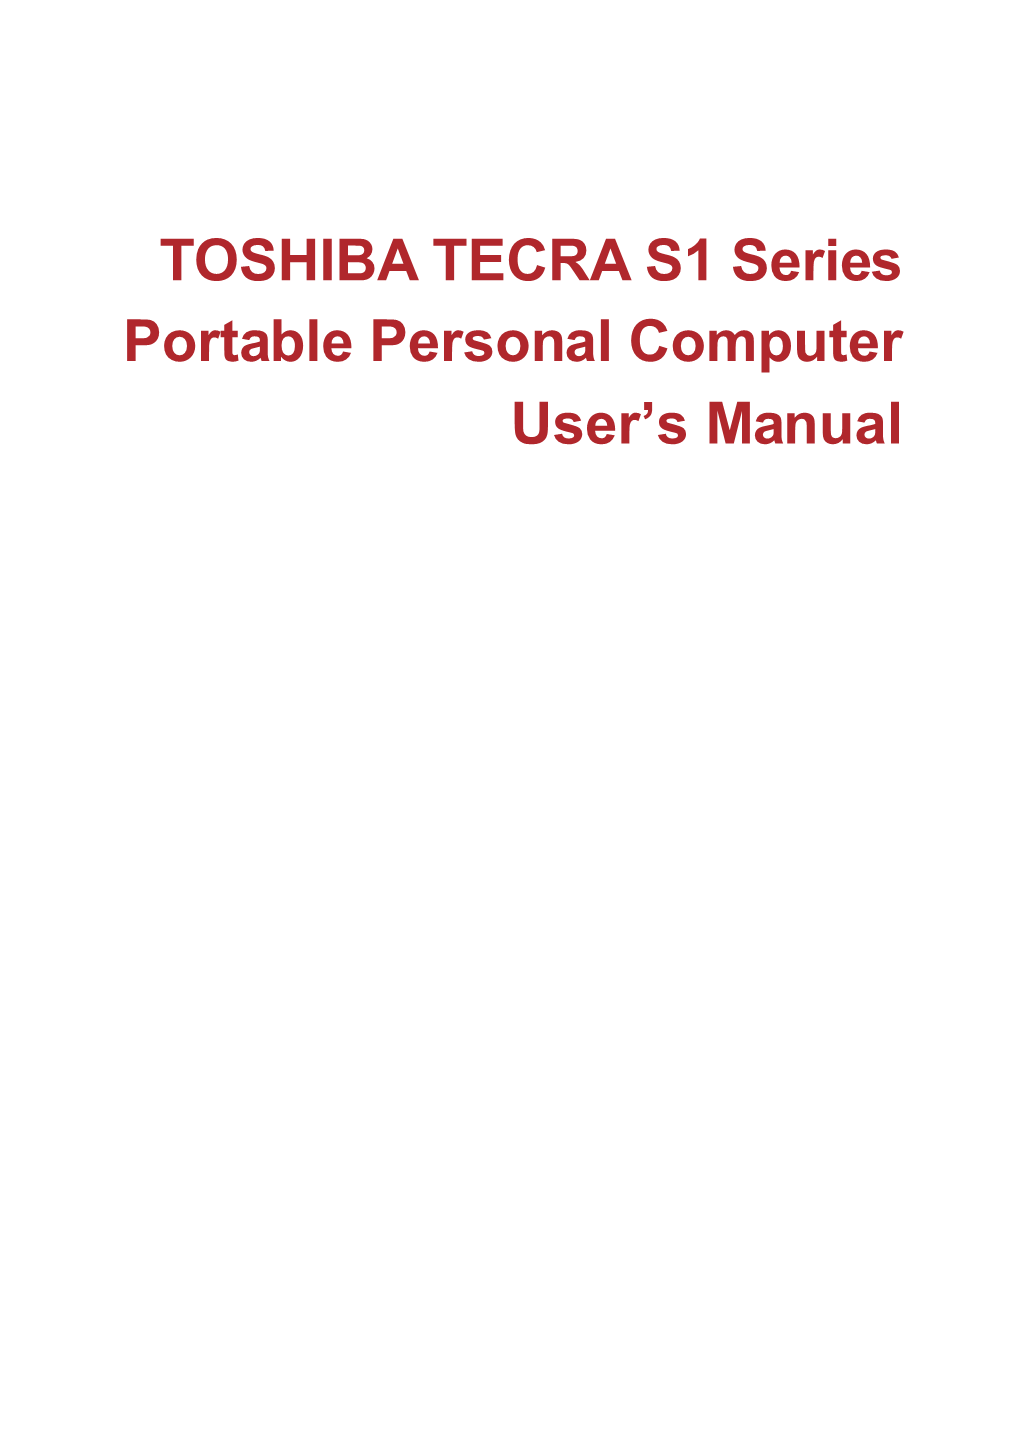 TOSHIBA TECRA S1 Series Portable Personal Computer User's Manual